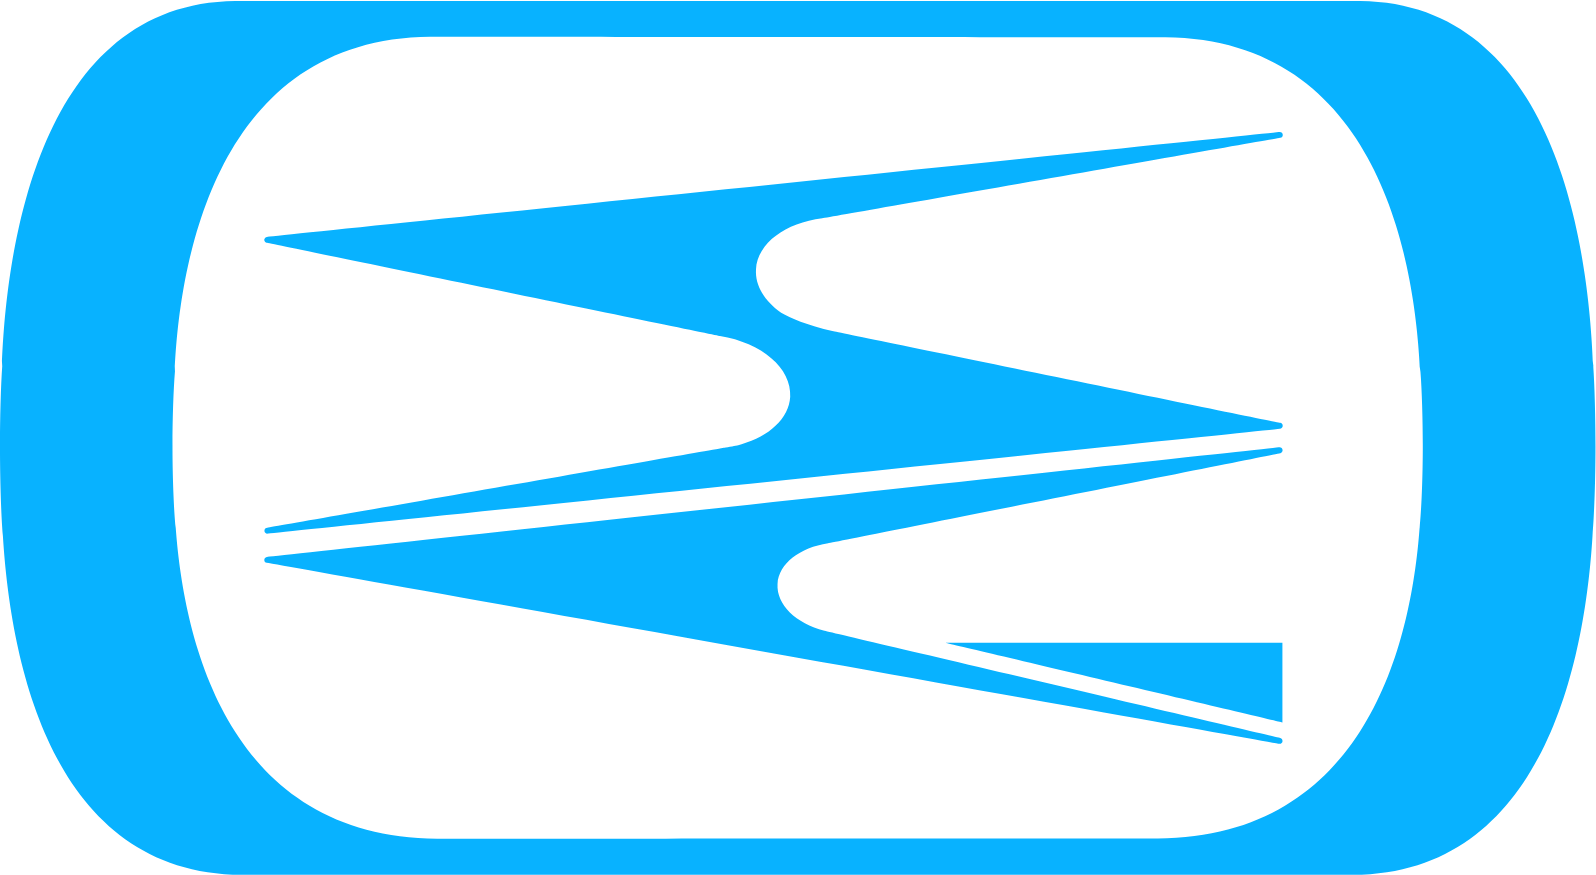 Smurfit Kappa Group logo in transparent PNG vectorized SVG formats